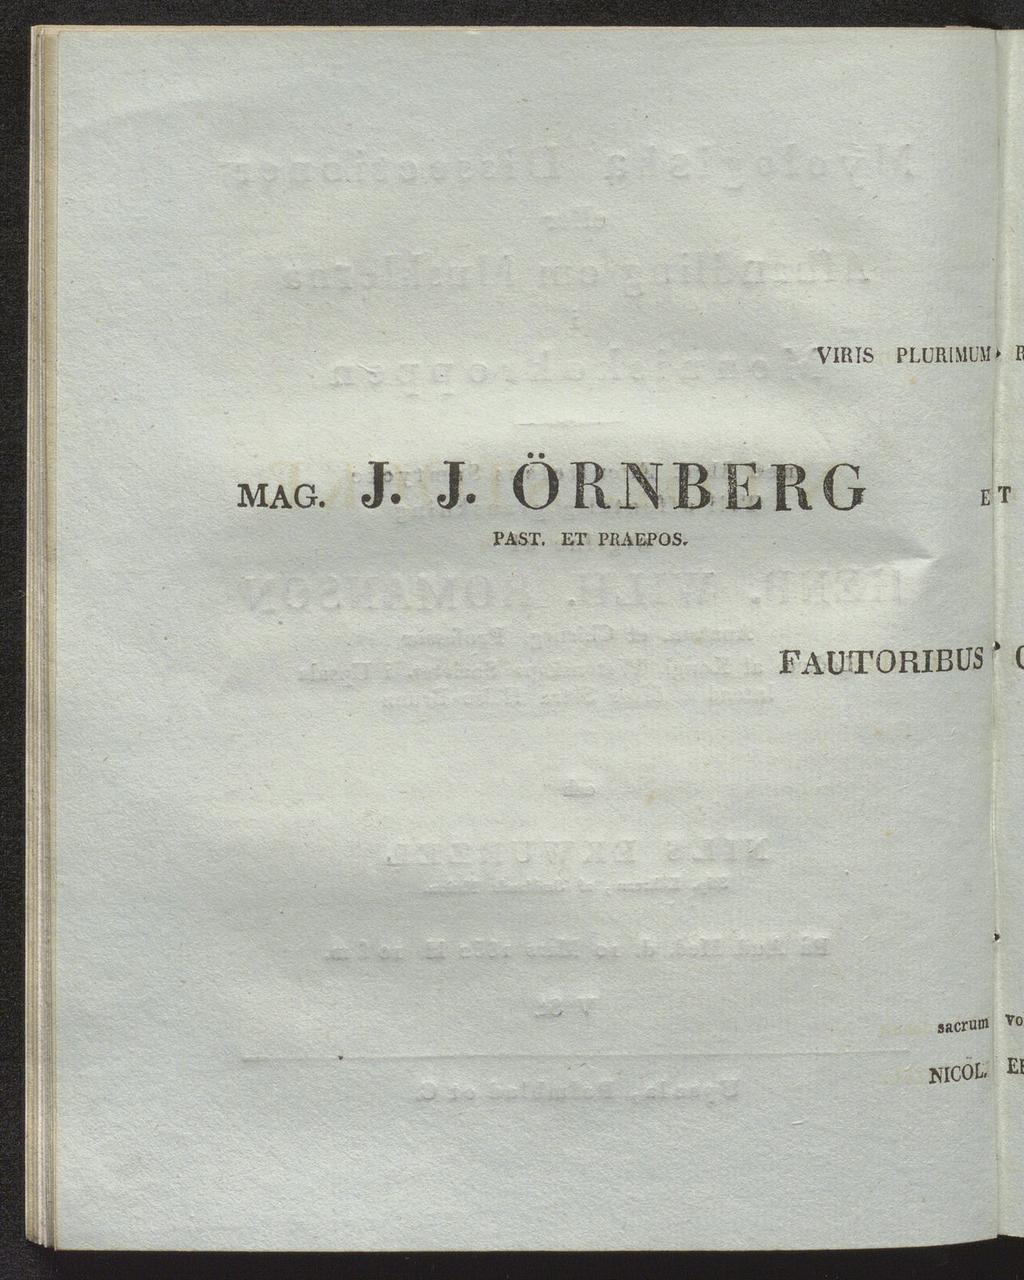 VIR IS PLURIMUM» E mag. J. J. ÖRNBERG PAST.